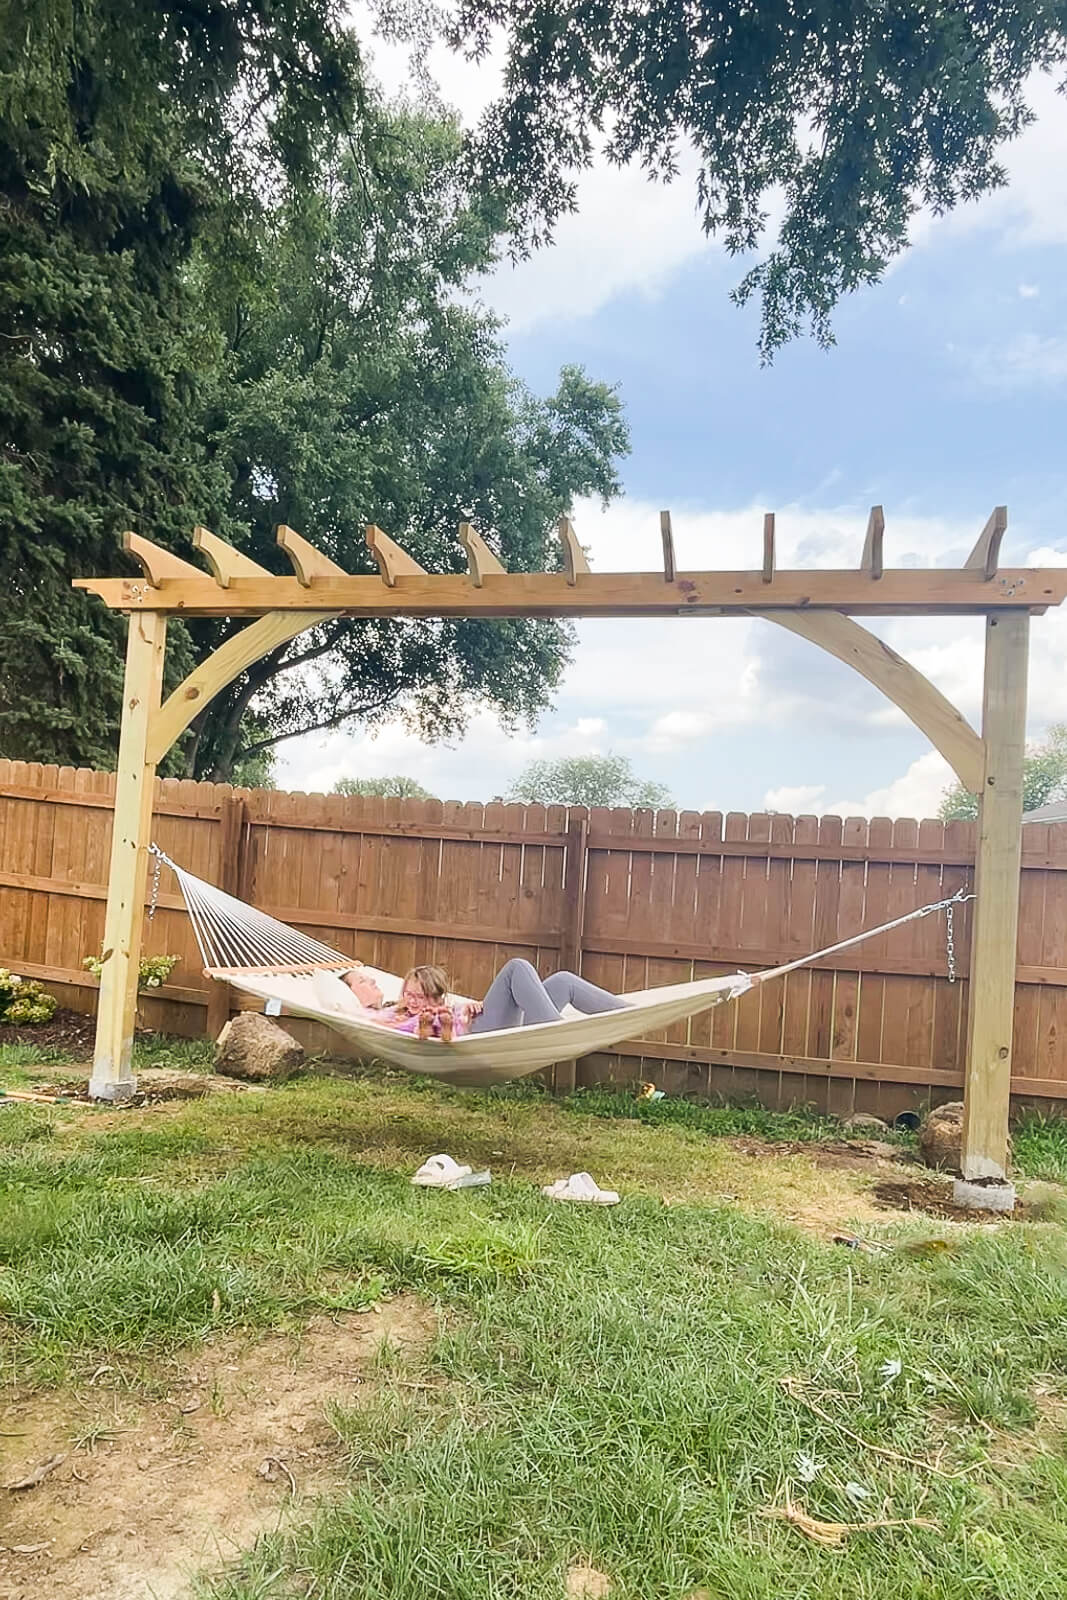 Relaxing on a DIY built, backyard hammock.